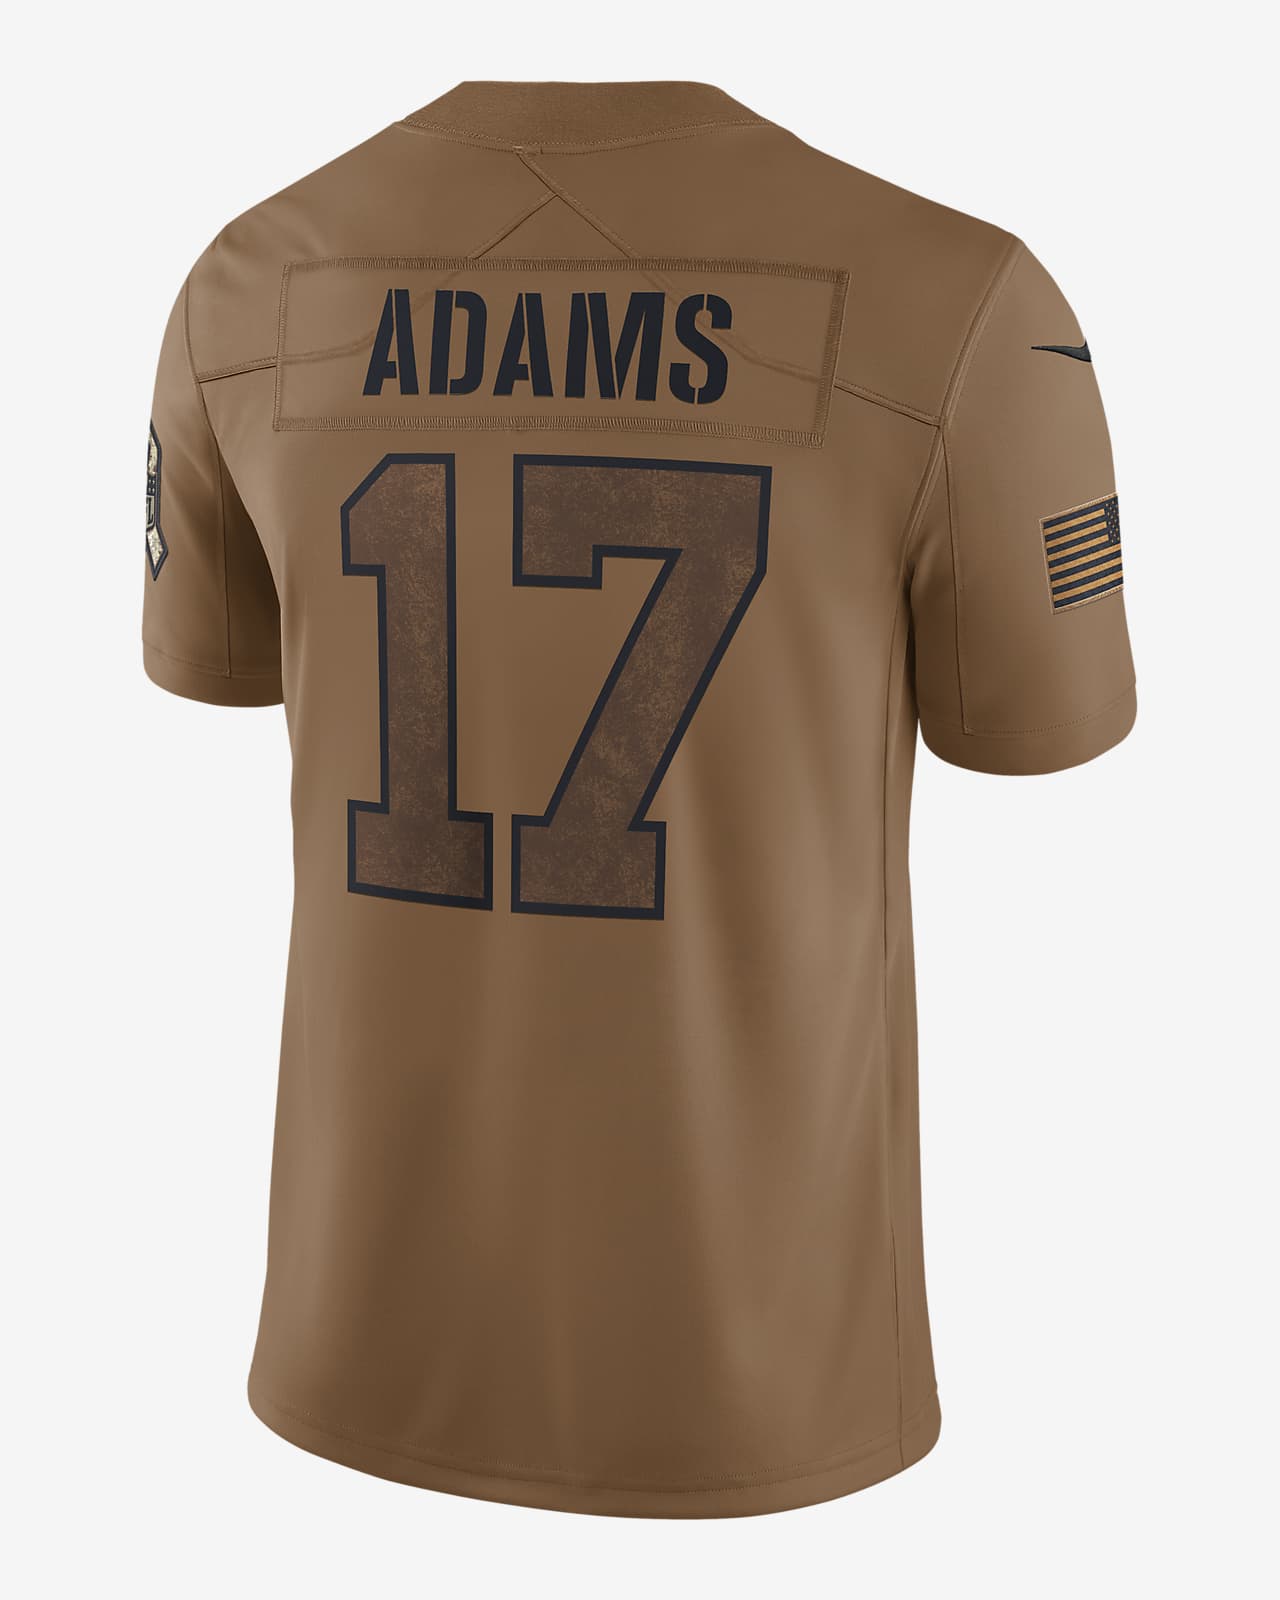 Las Vegas Raiders Nike Home Limited Jersey - Devante Adams - Mens